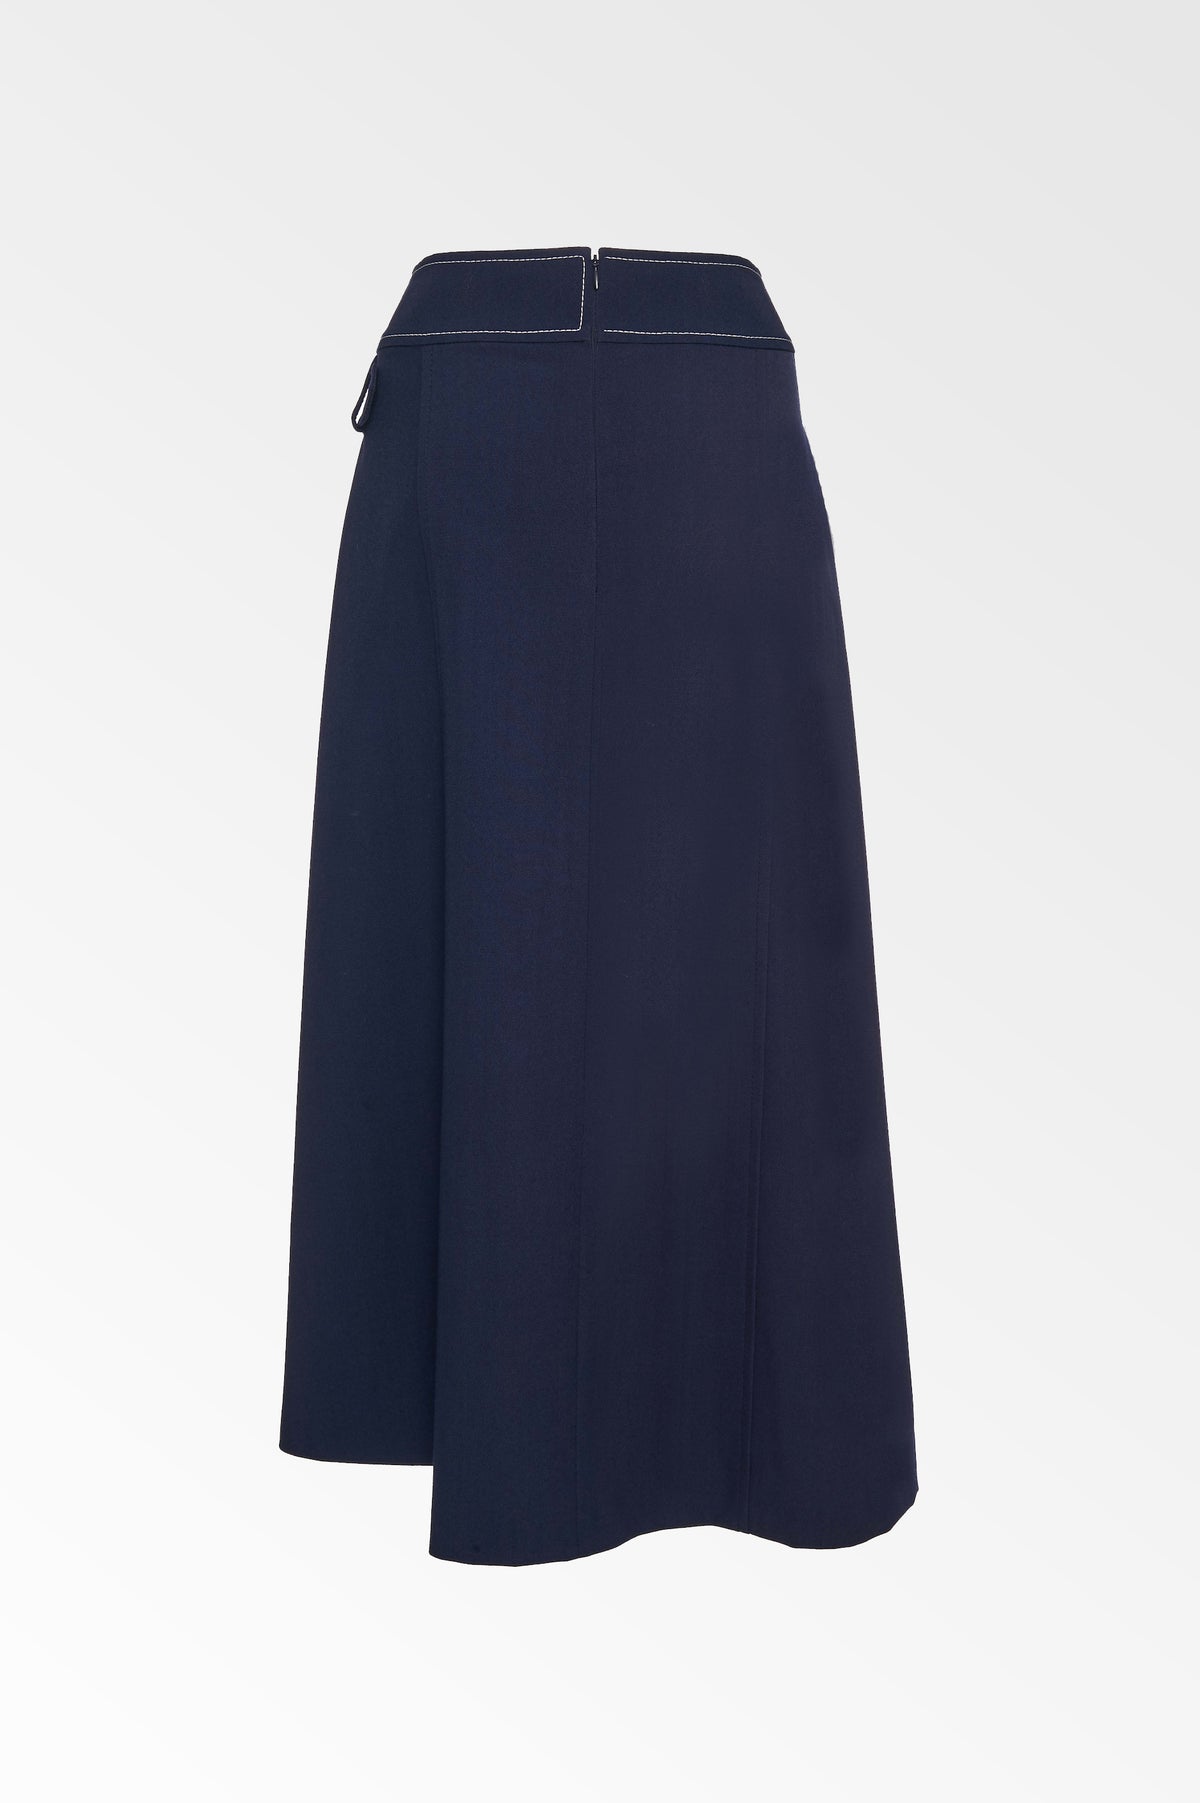 Louis Vuitton Signature Buckle Wool Twill Skirt